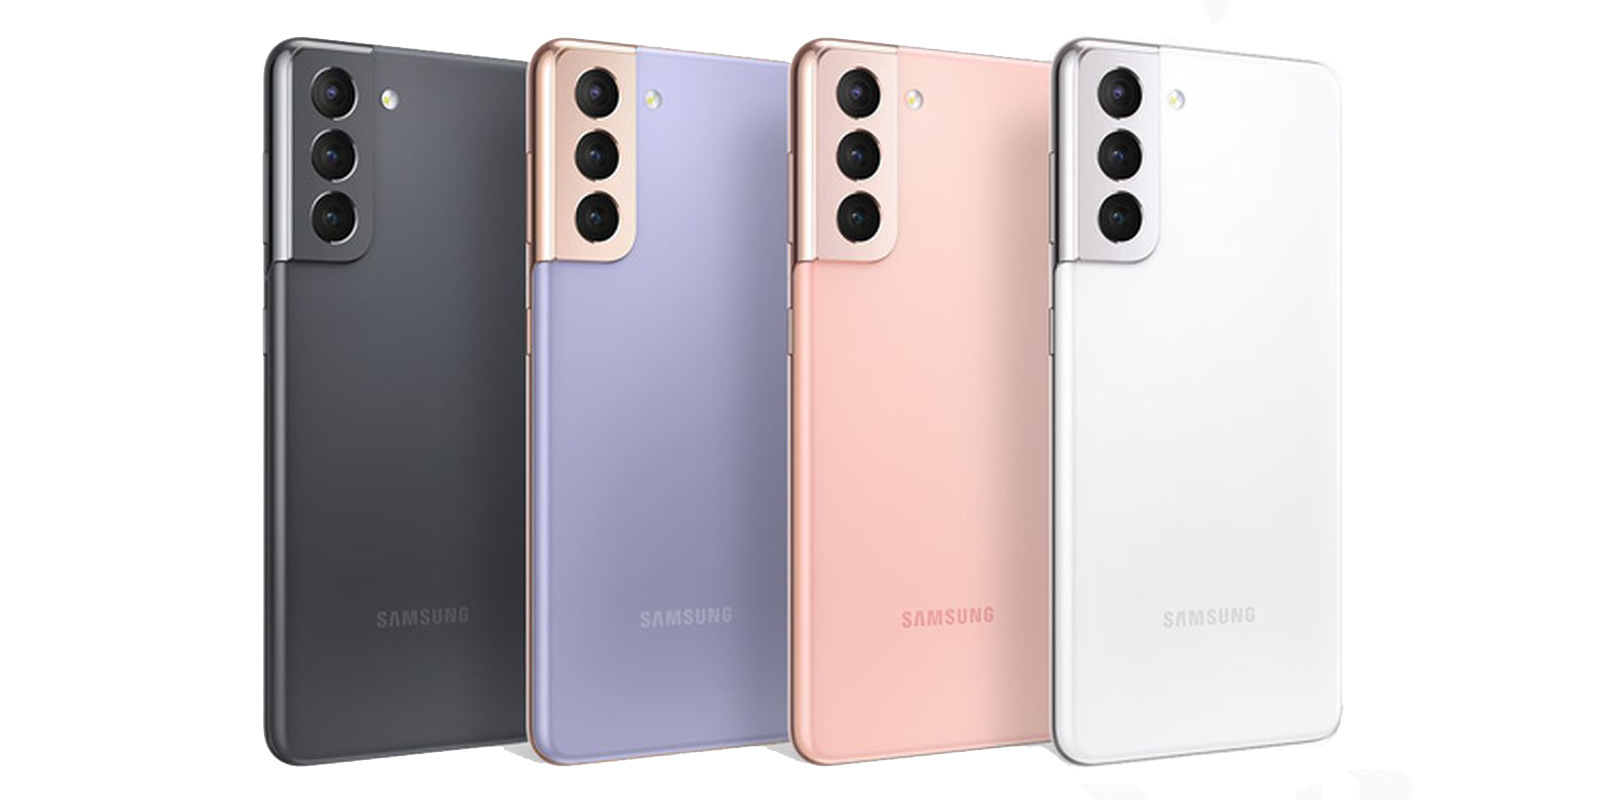 Samsung представила трио флагманов Galaxy S21